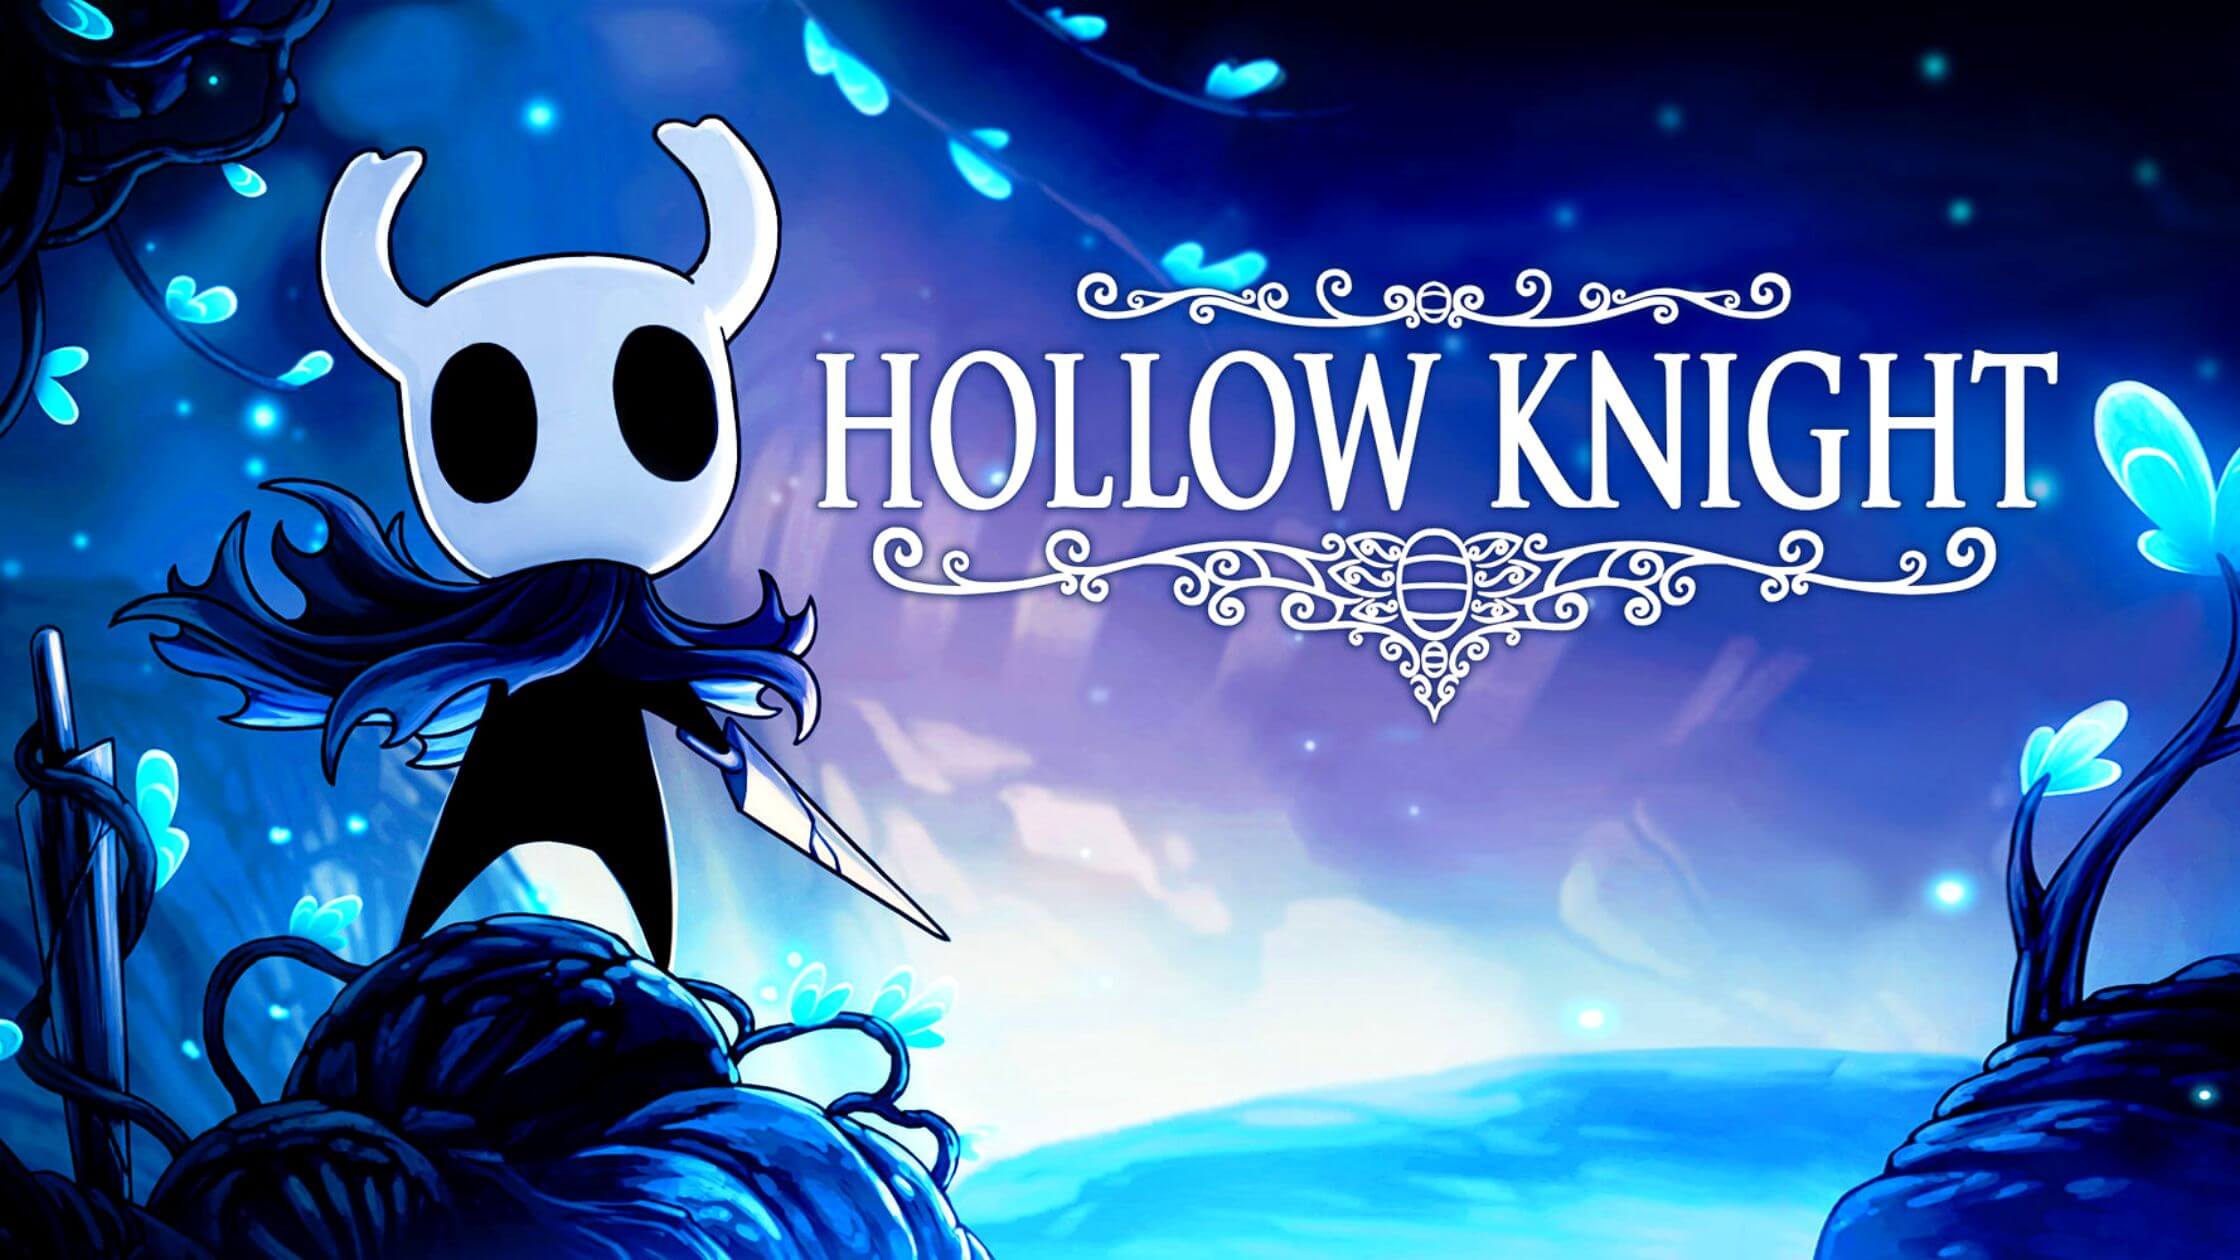 6. Hollow Knight